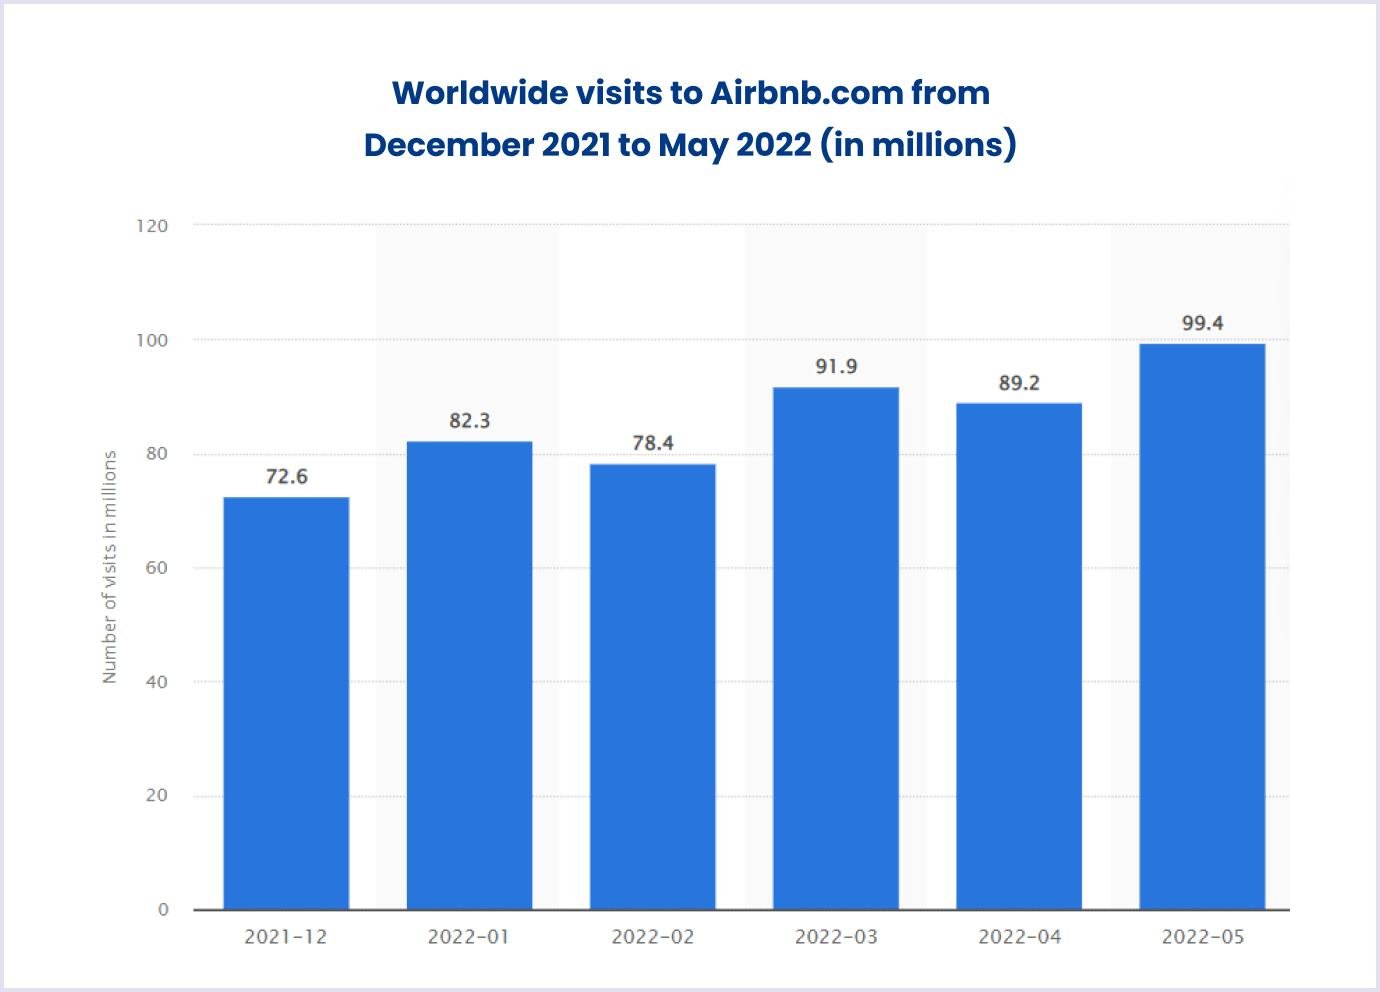 Worldwide visits to the Airbnb rental platform